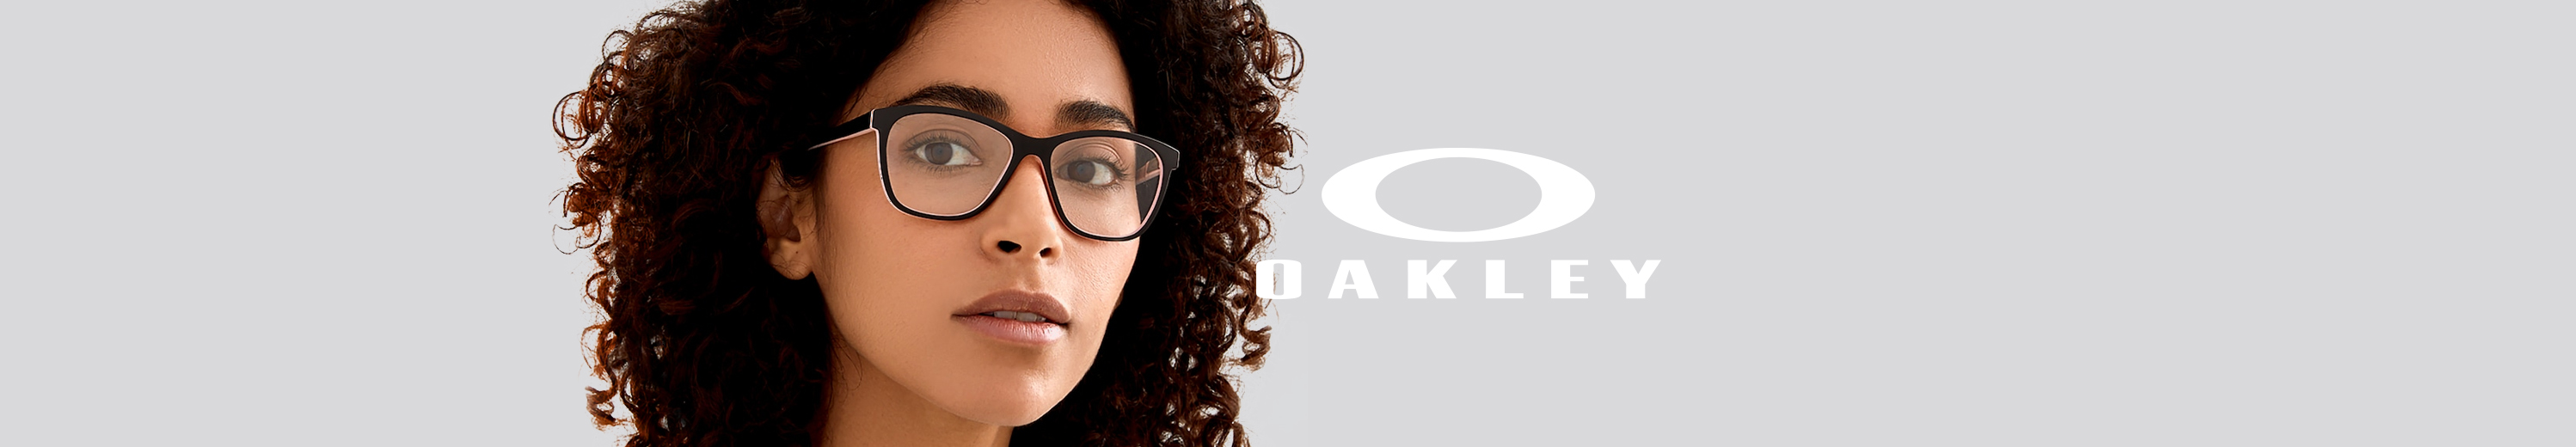 Oakley Eyeglasses for Women